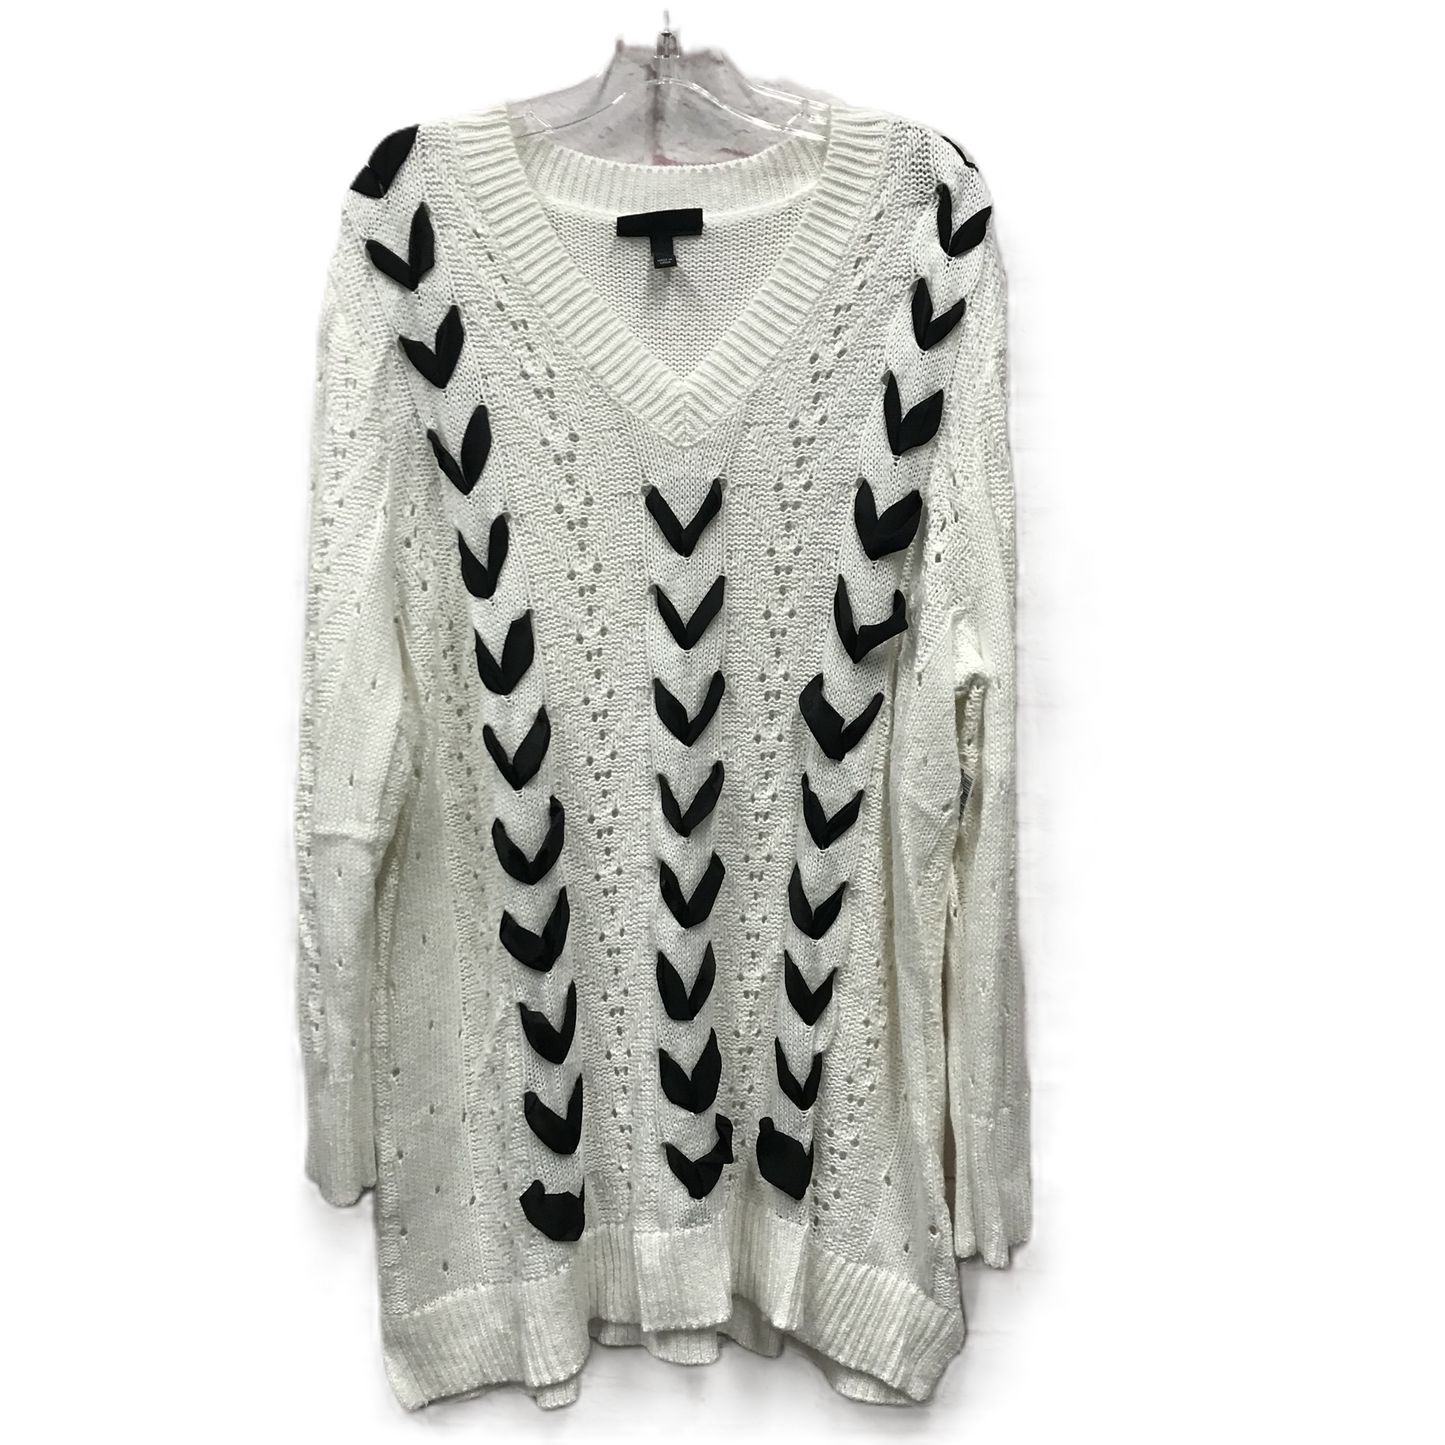 Black & White Sweater By Lane Bryant, Size: 3x